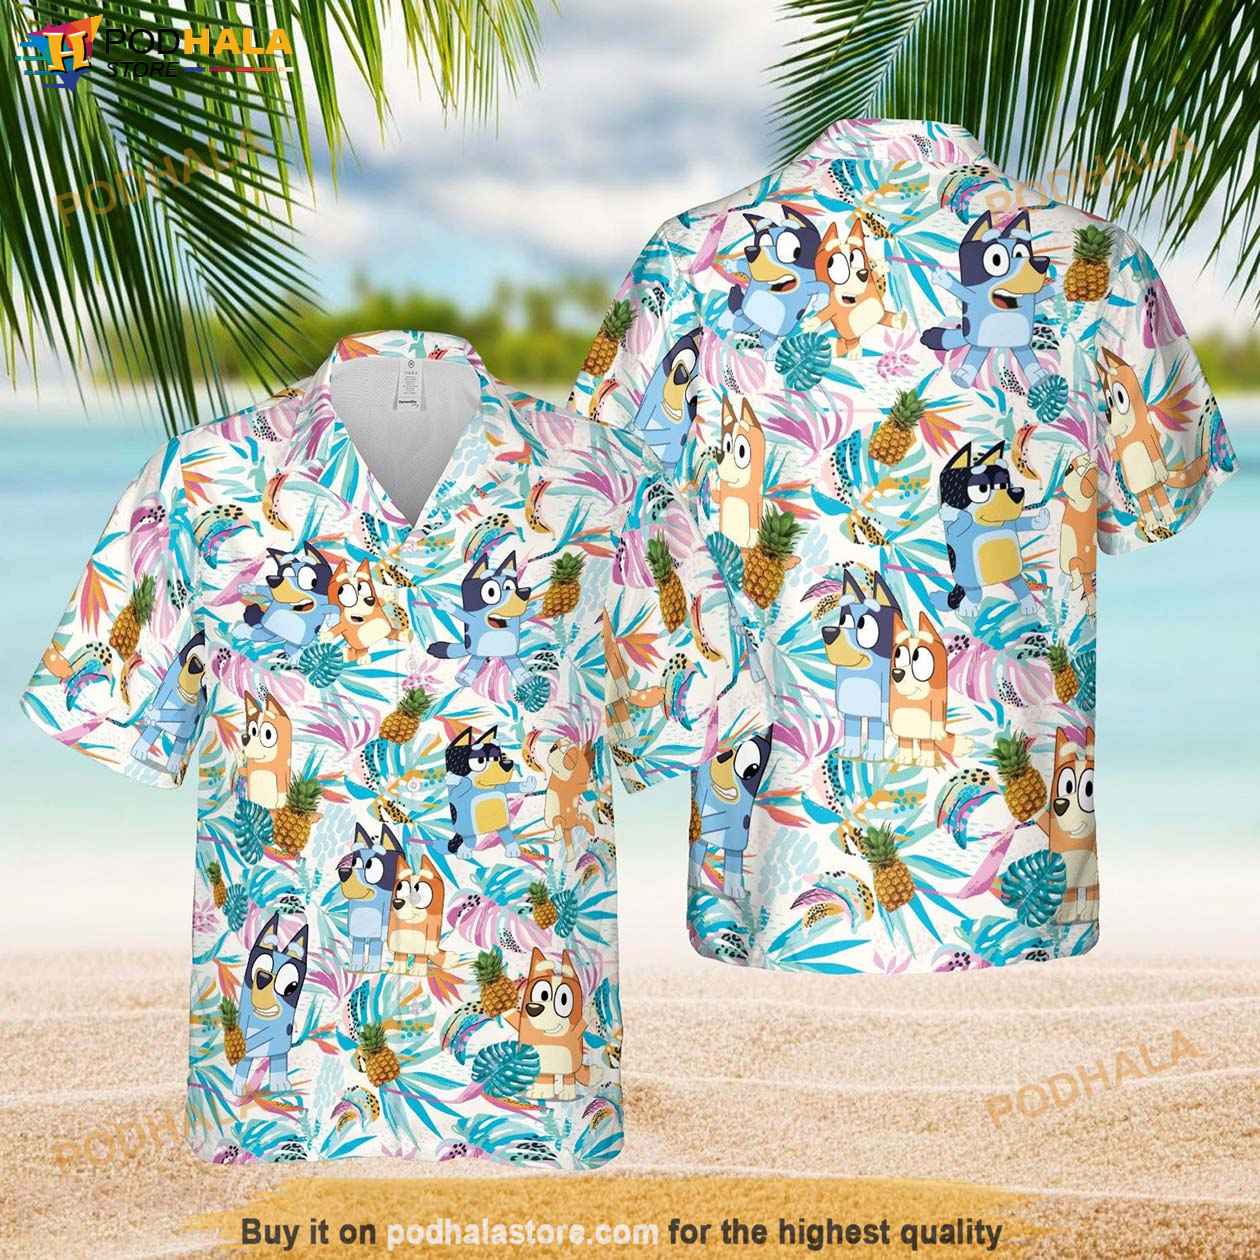 New York Yankees Baseball Sewing Pattern 3D Custom Name Hawaiian Shirt Best  Gift For Men And Women Fans